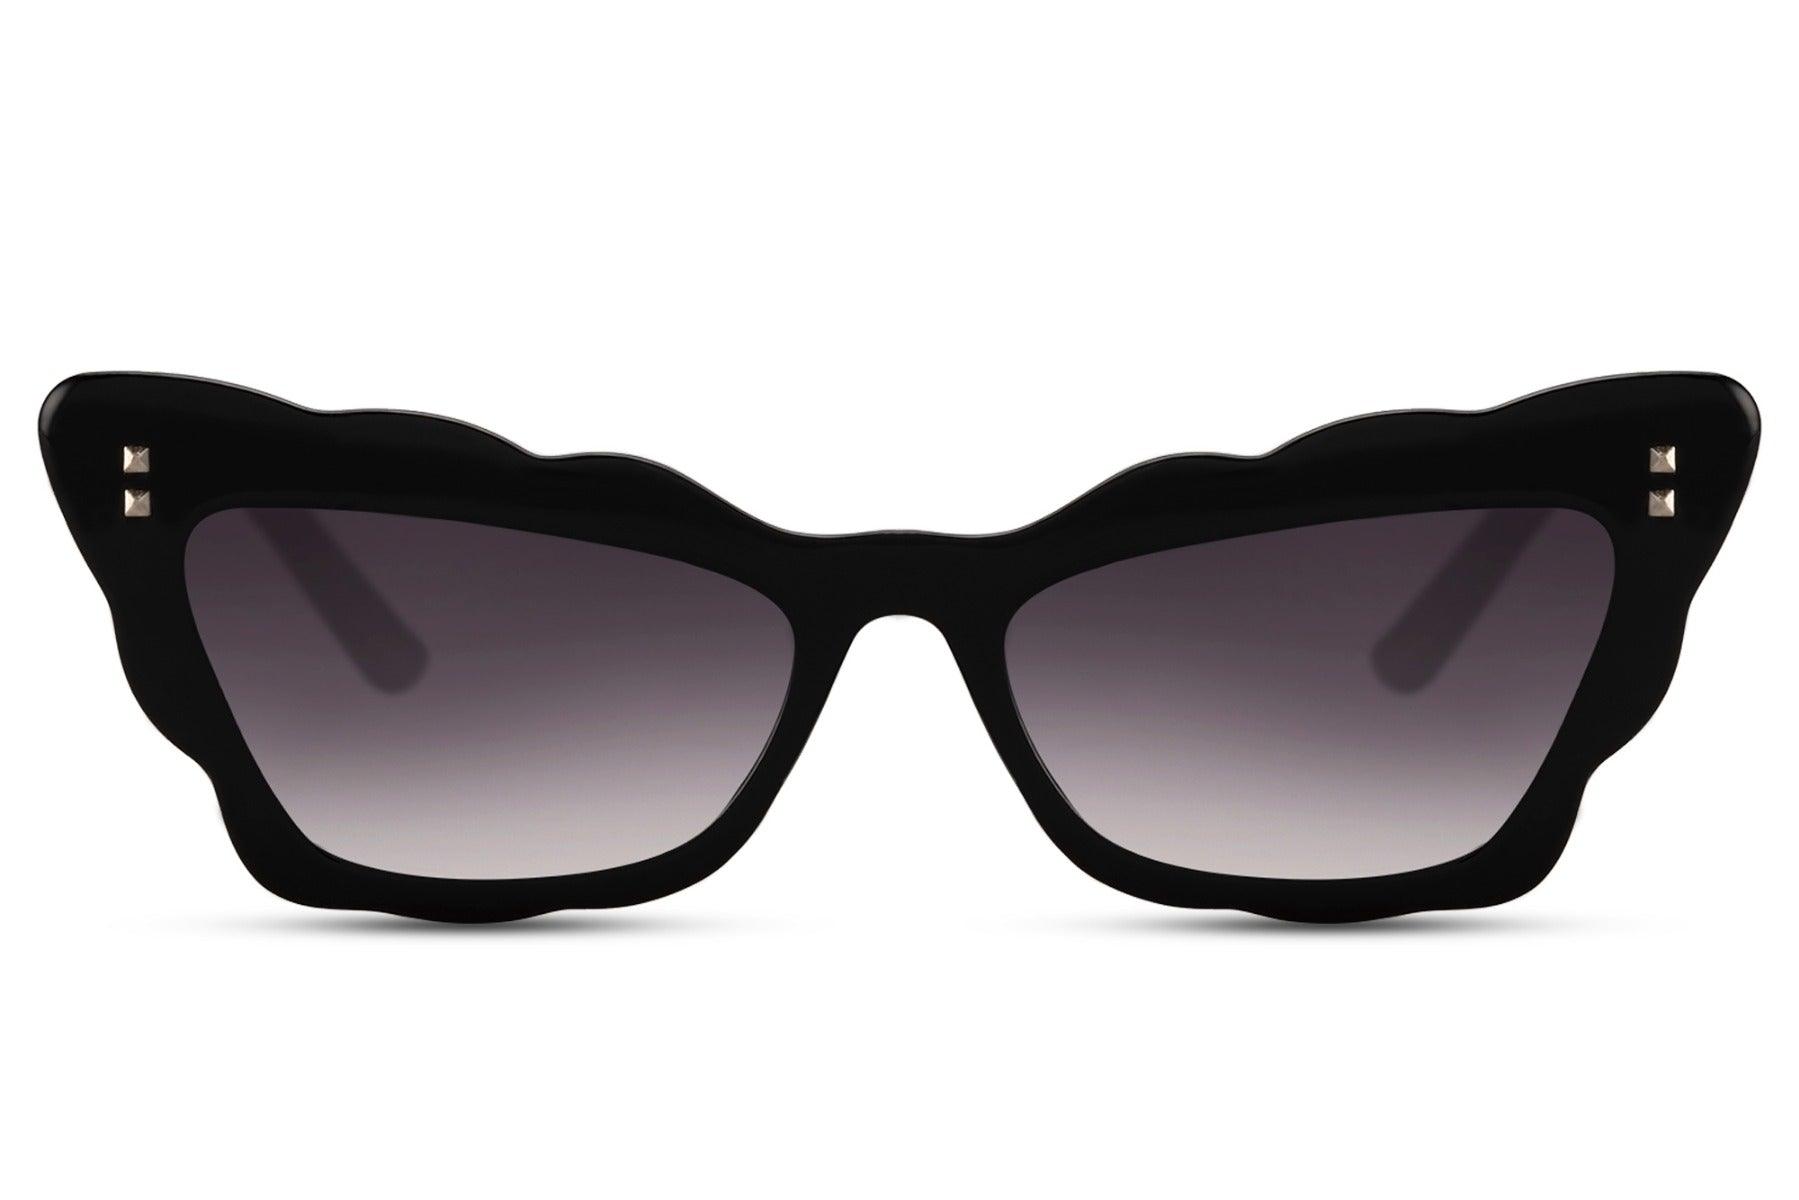 Lanai Kitty Cat Eye Black Sunglasses - Blissfully Brand Wings Retro Funky Bold Vibrant Women's